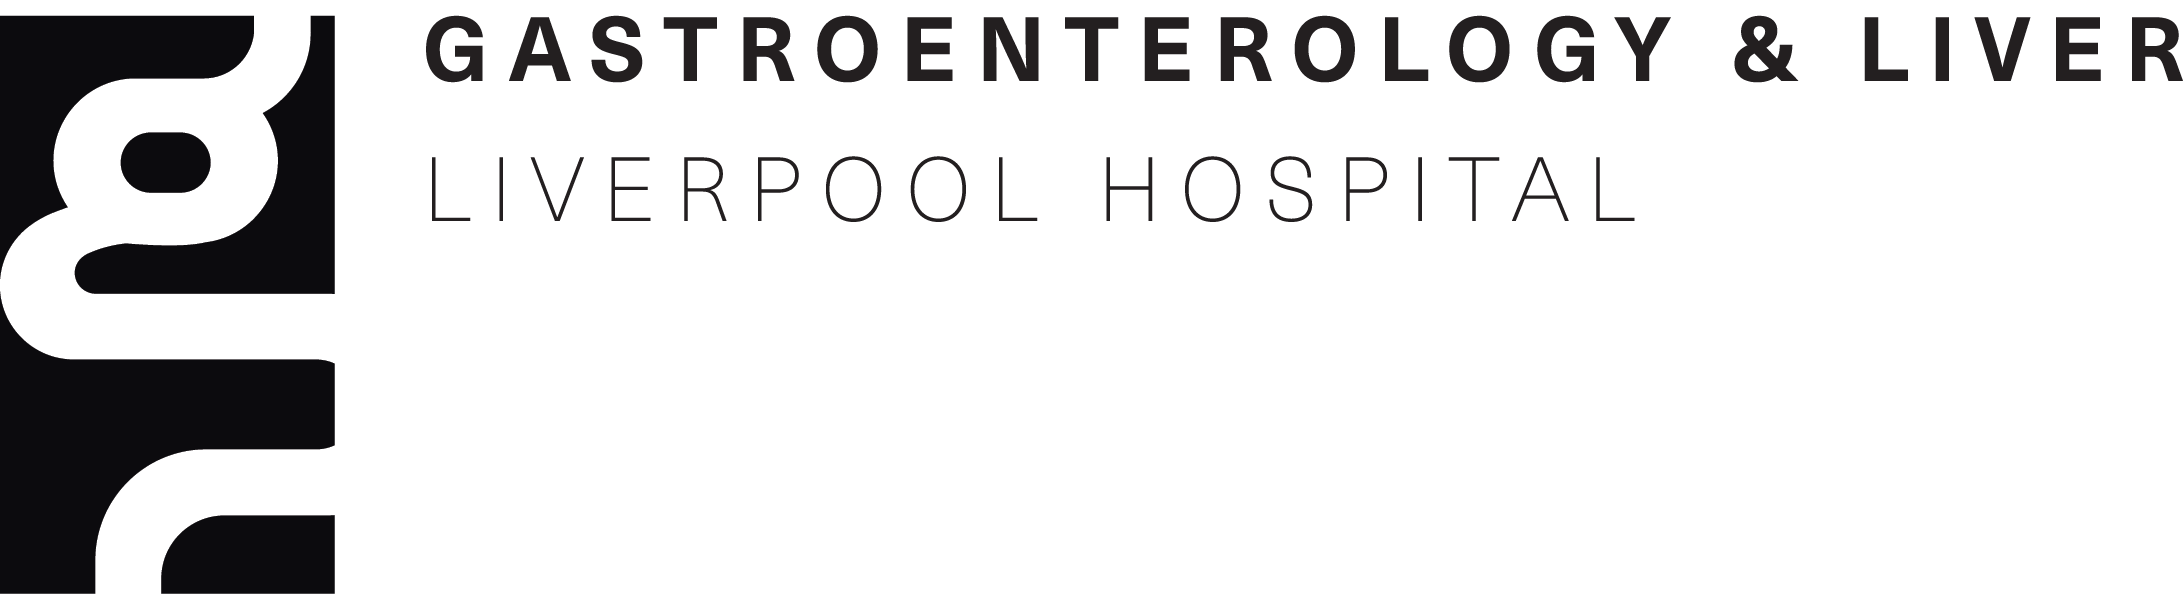 Gastroenterology and Liver - Liverpool Hospital